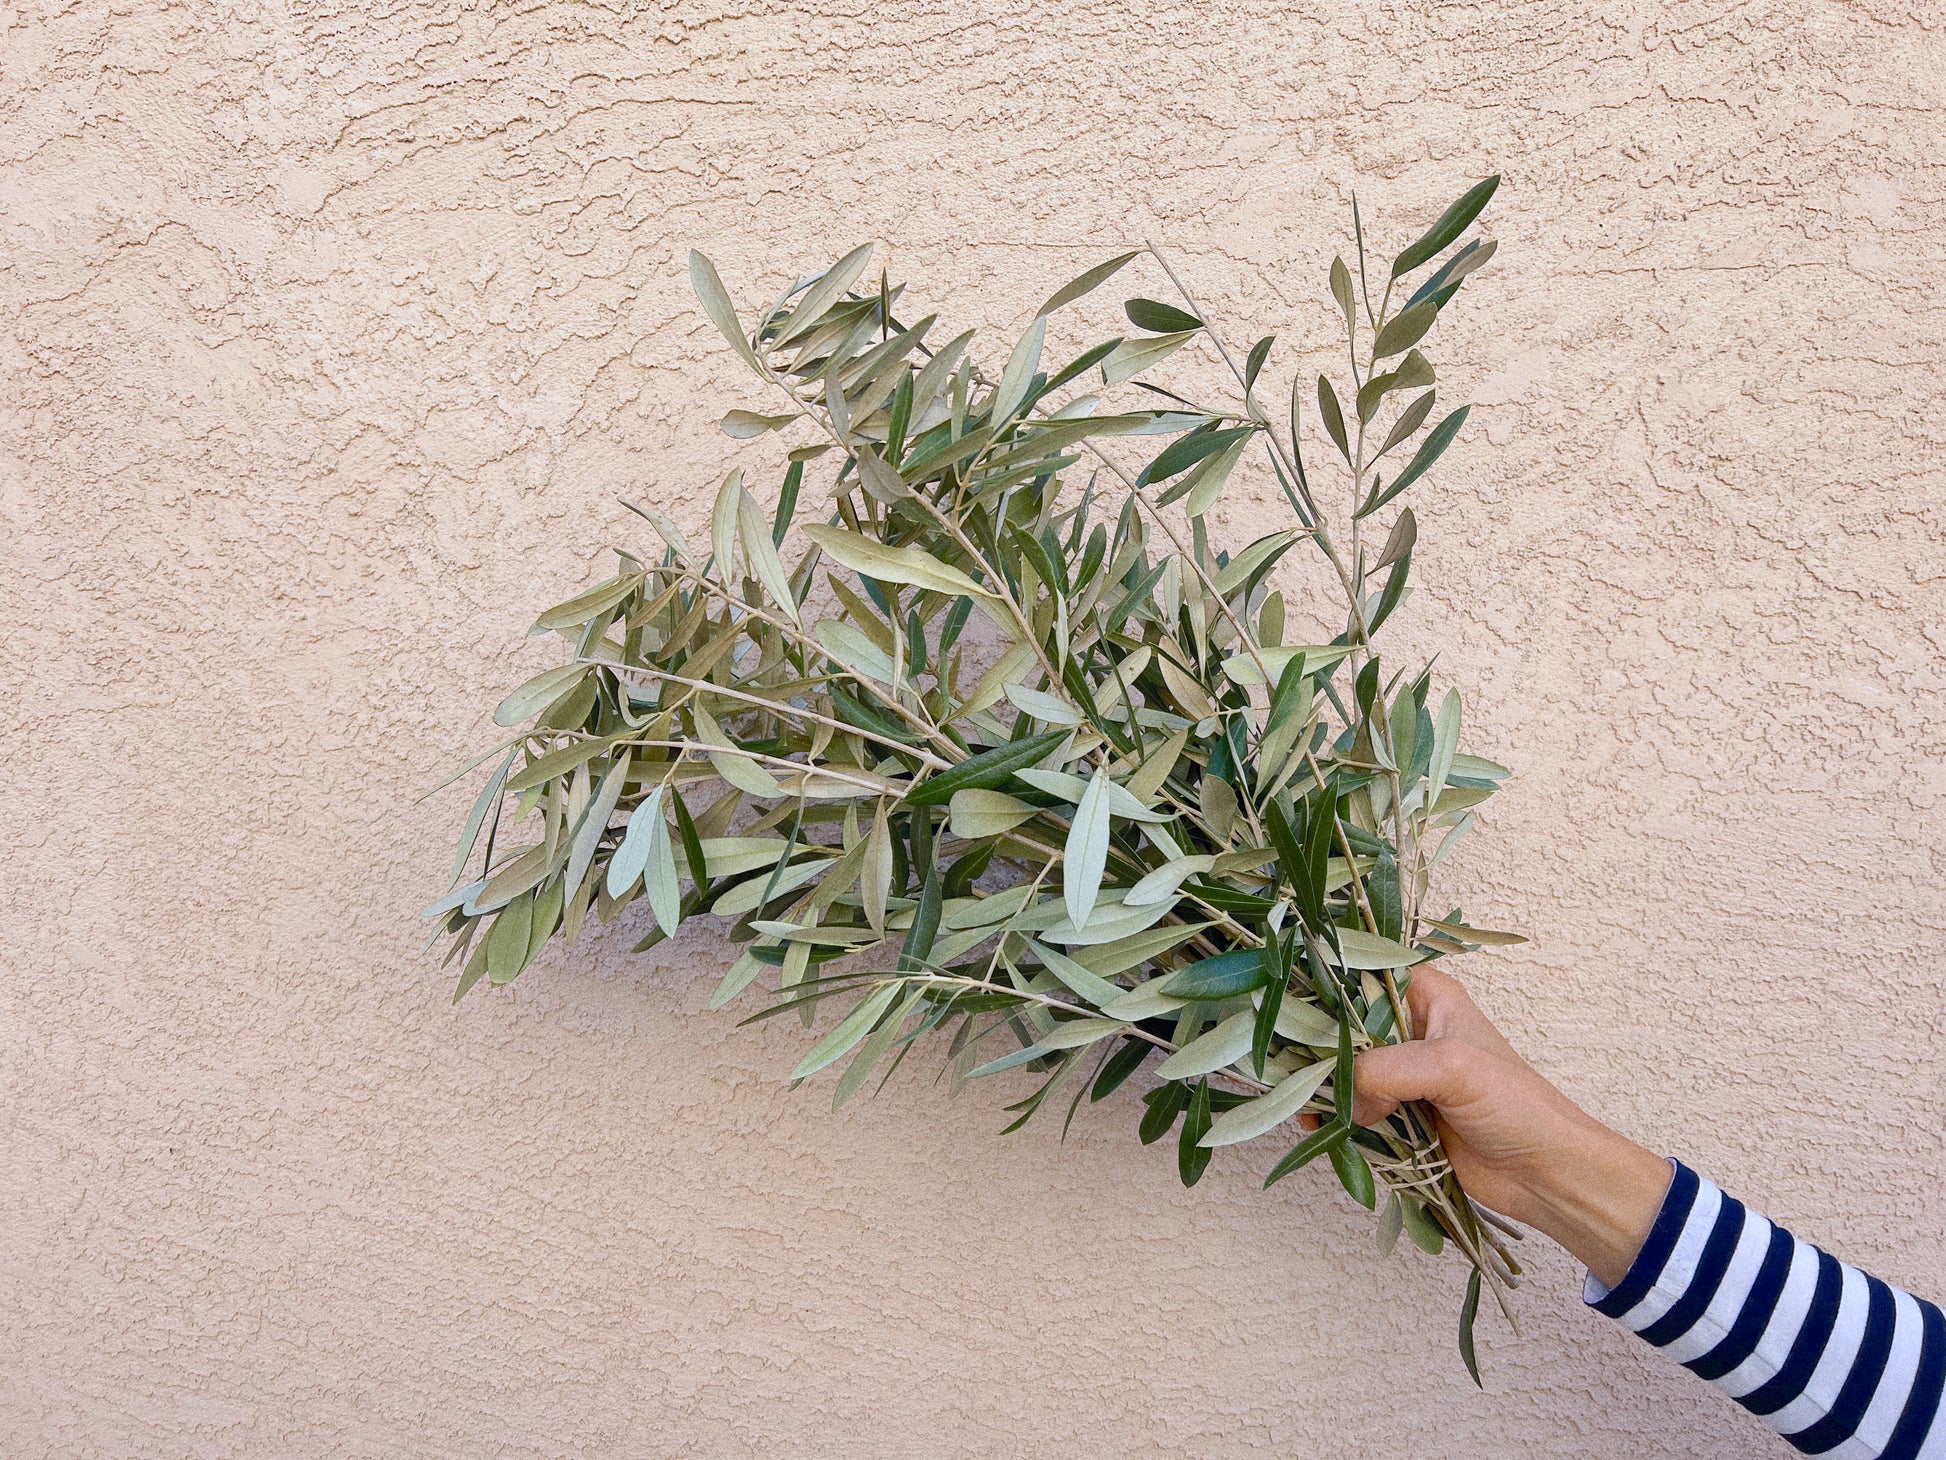 Real Olive Branch Bundle Fresh/Dry